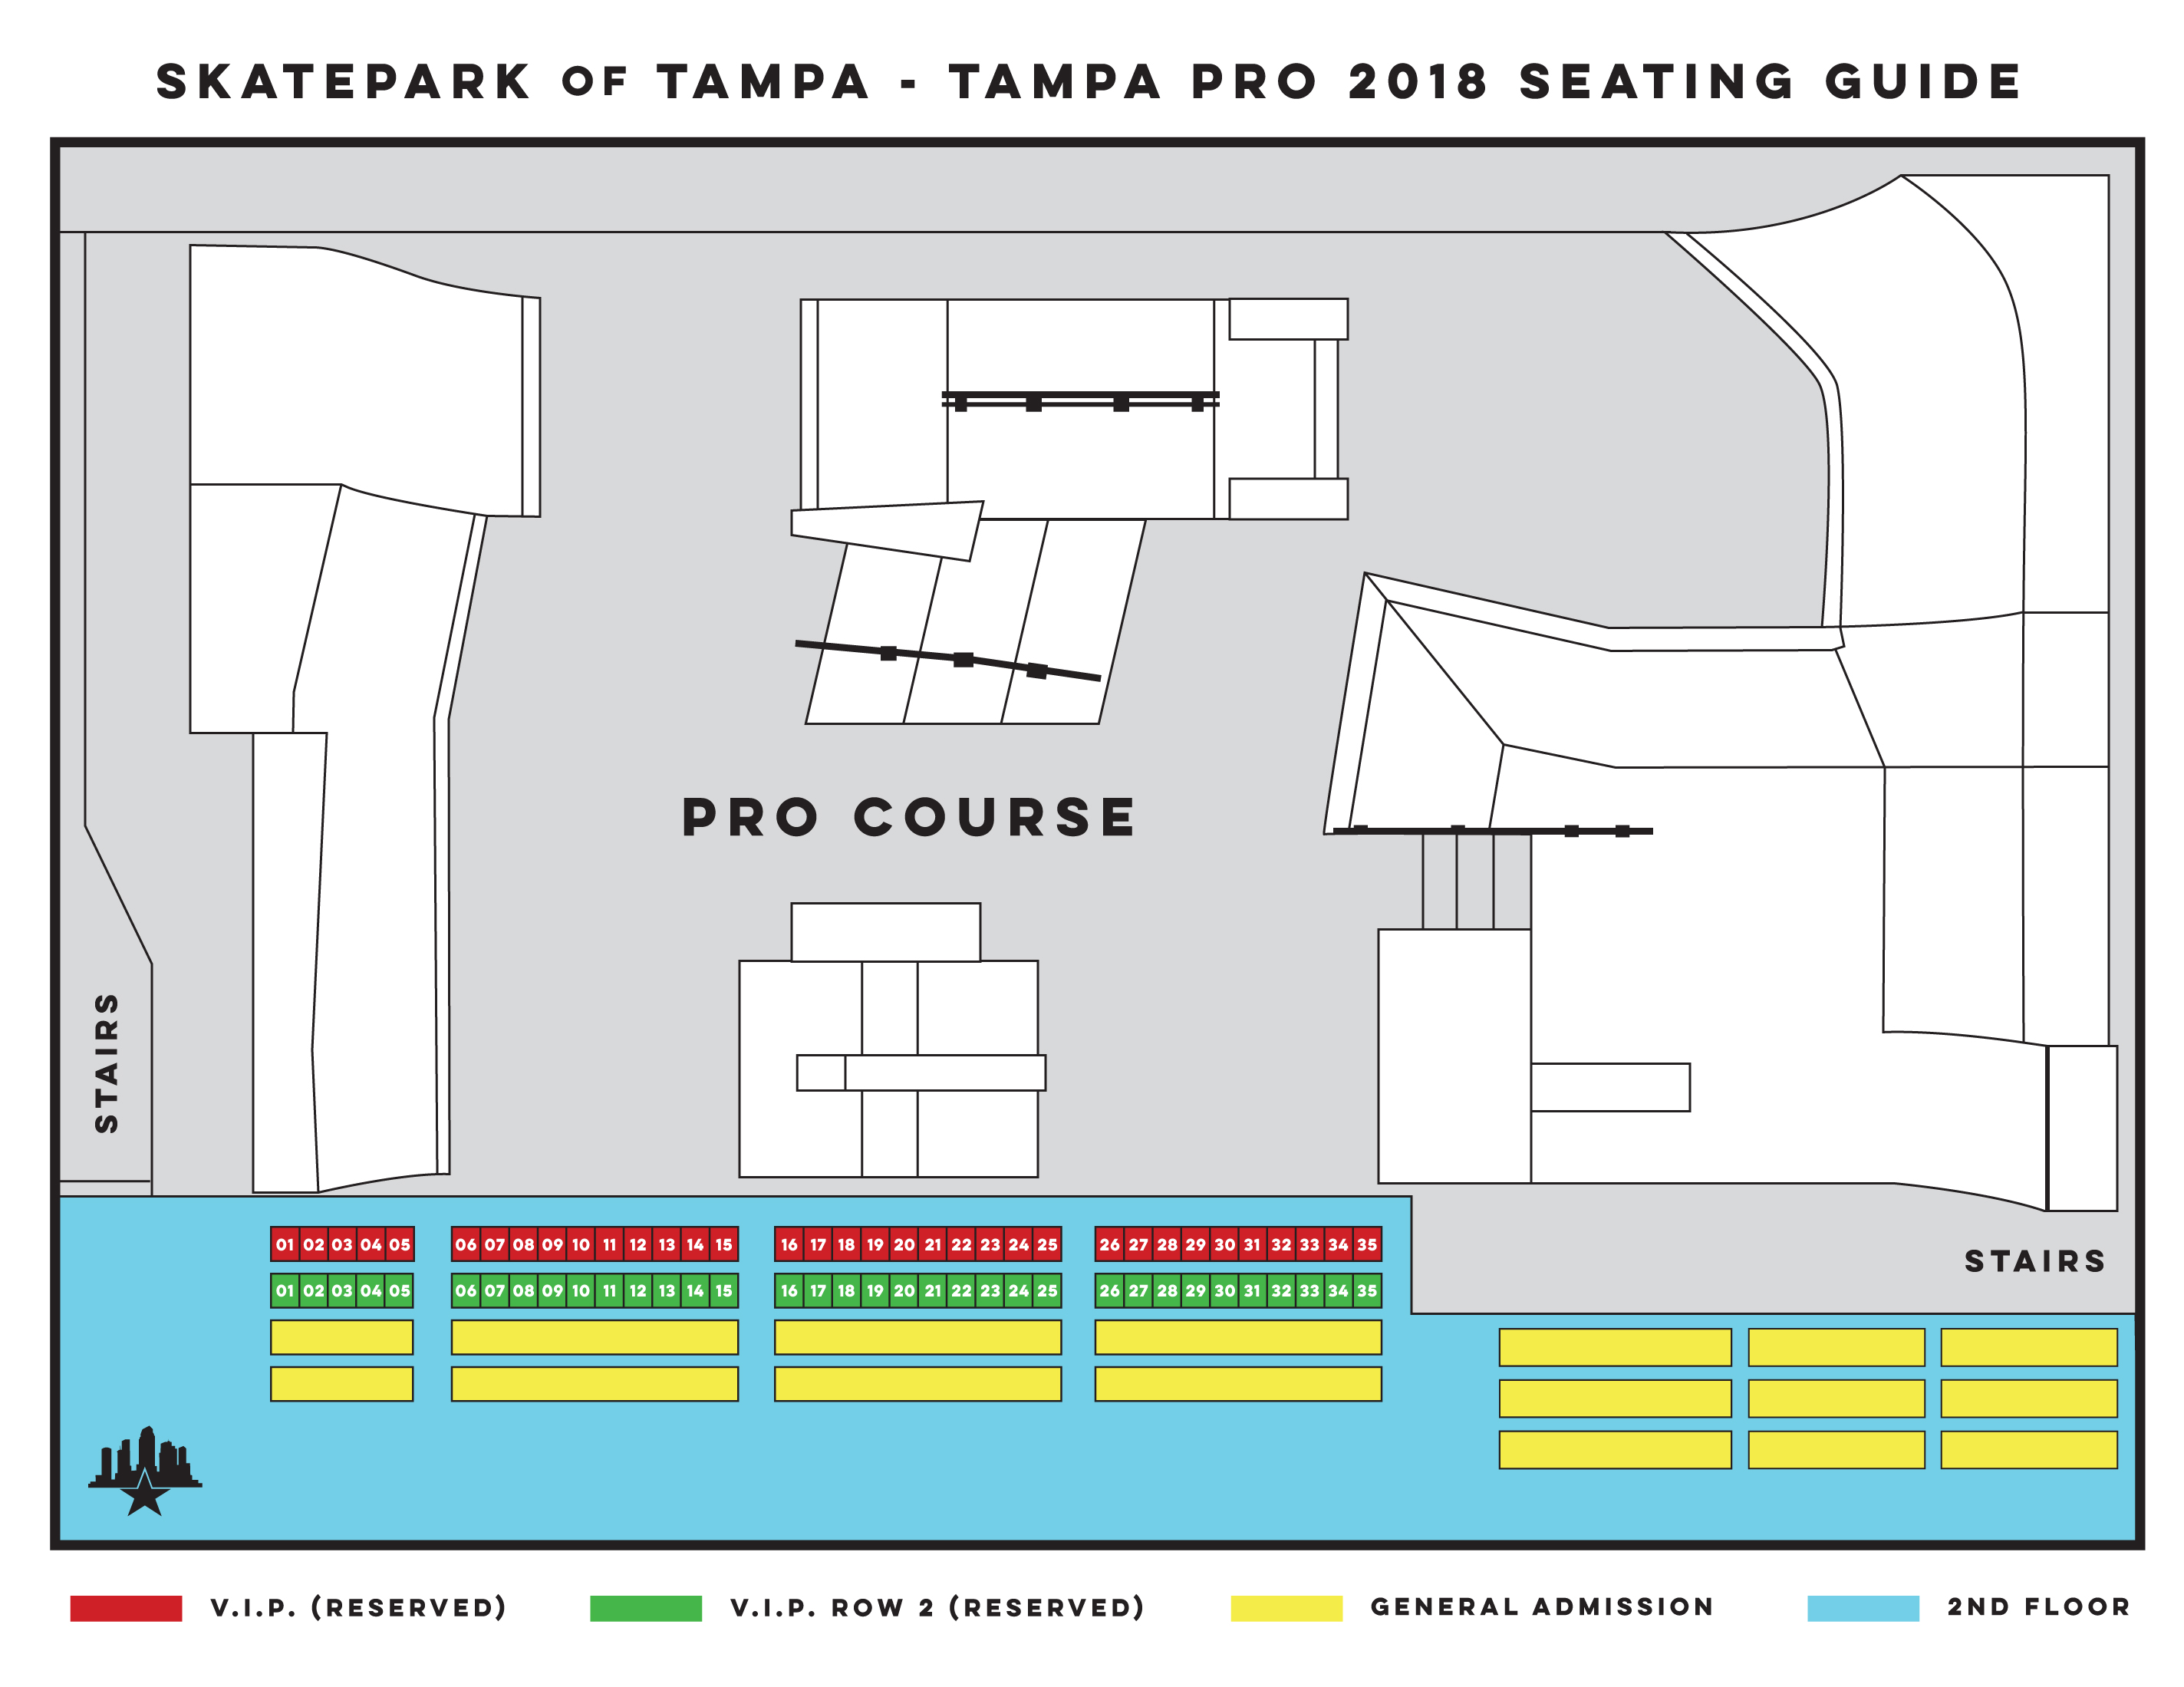 Tampa Pro 2018 Seating Guide